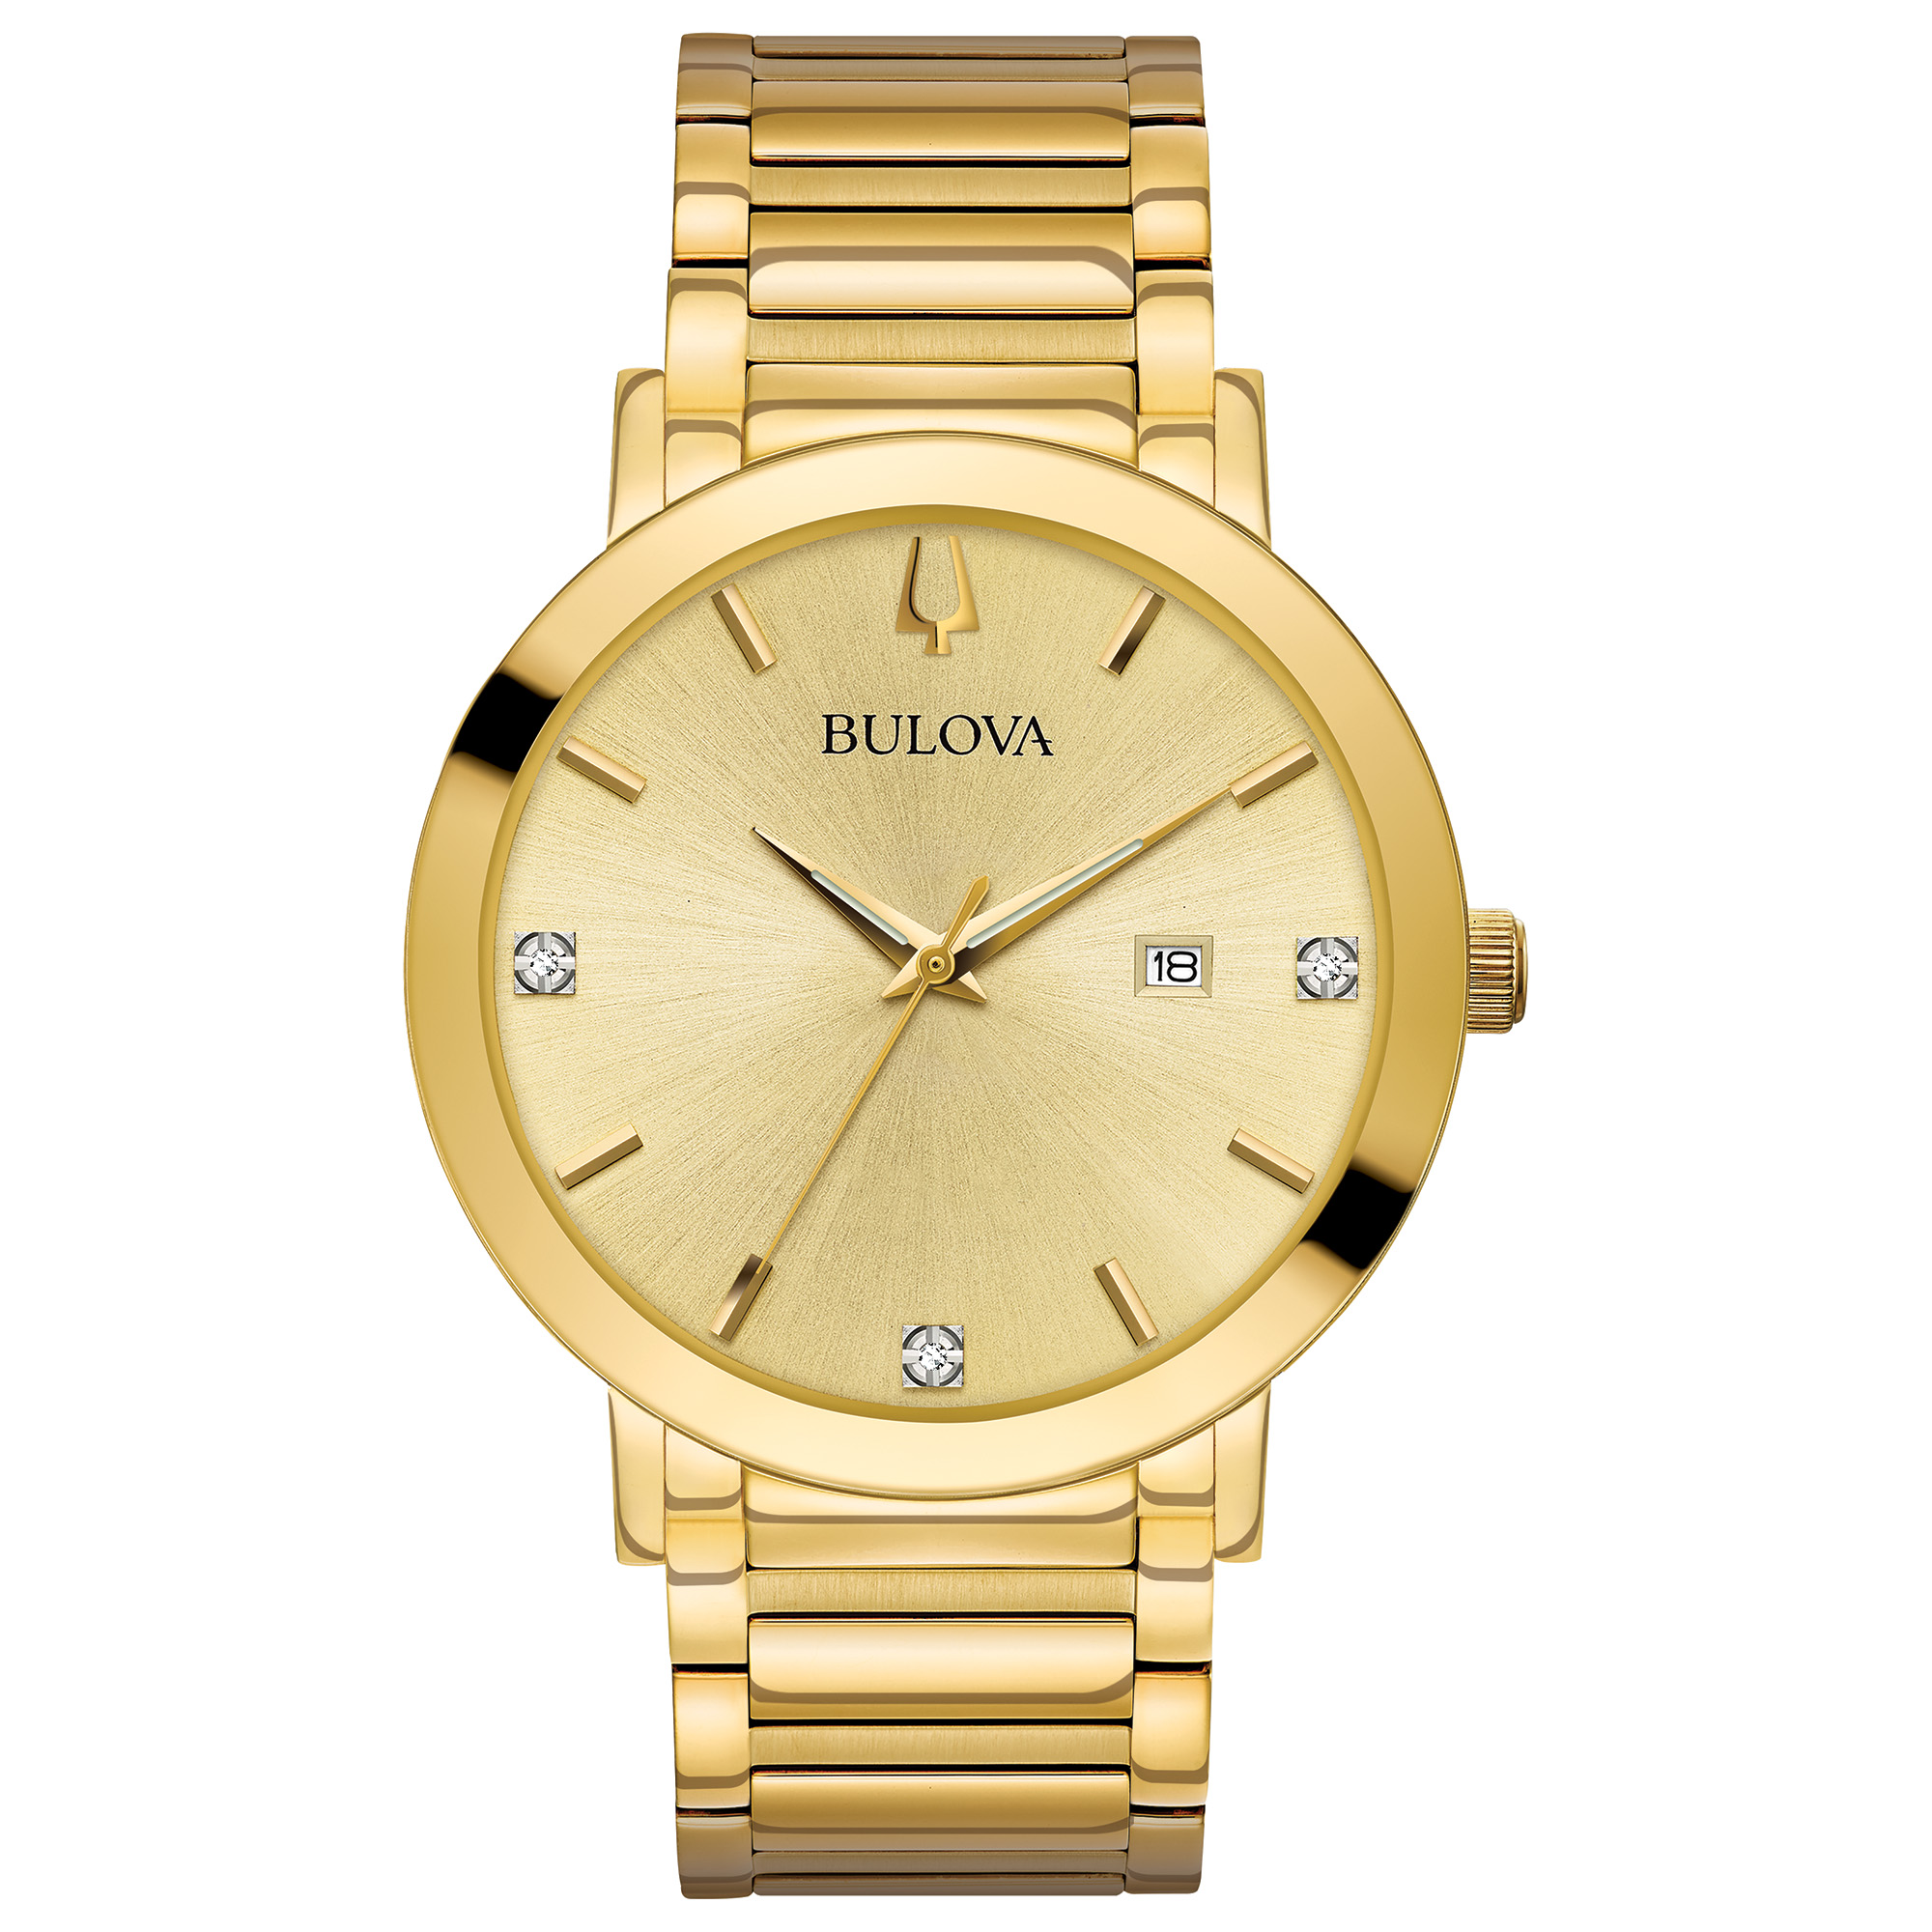 Bulova Men's Gold Tone Stainless Steel Diamond Dial Watch